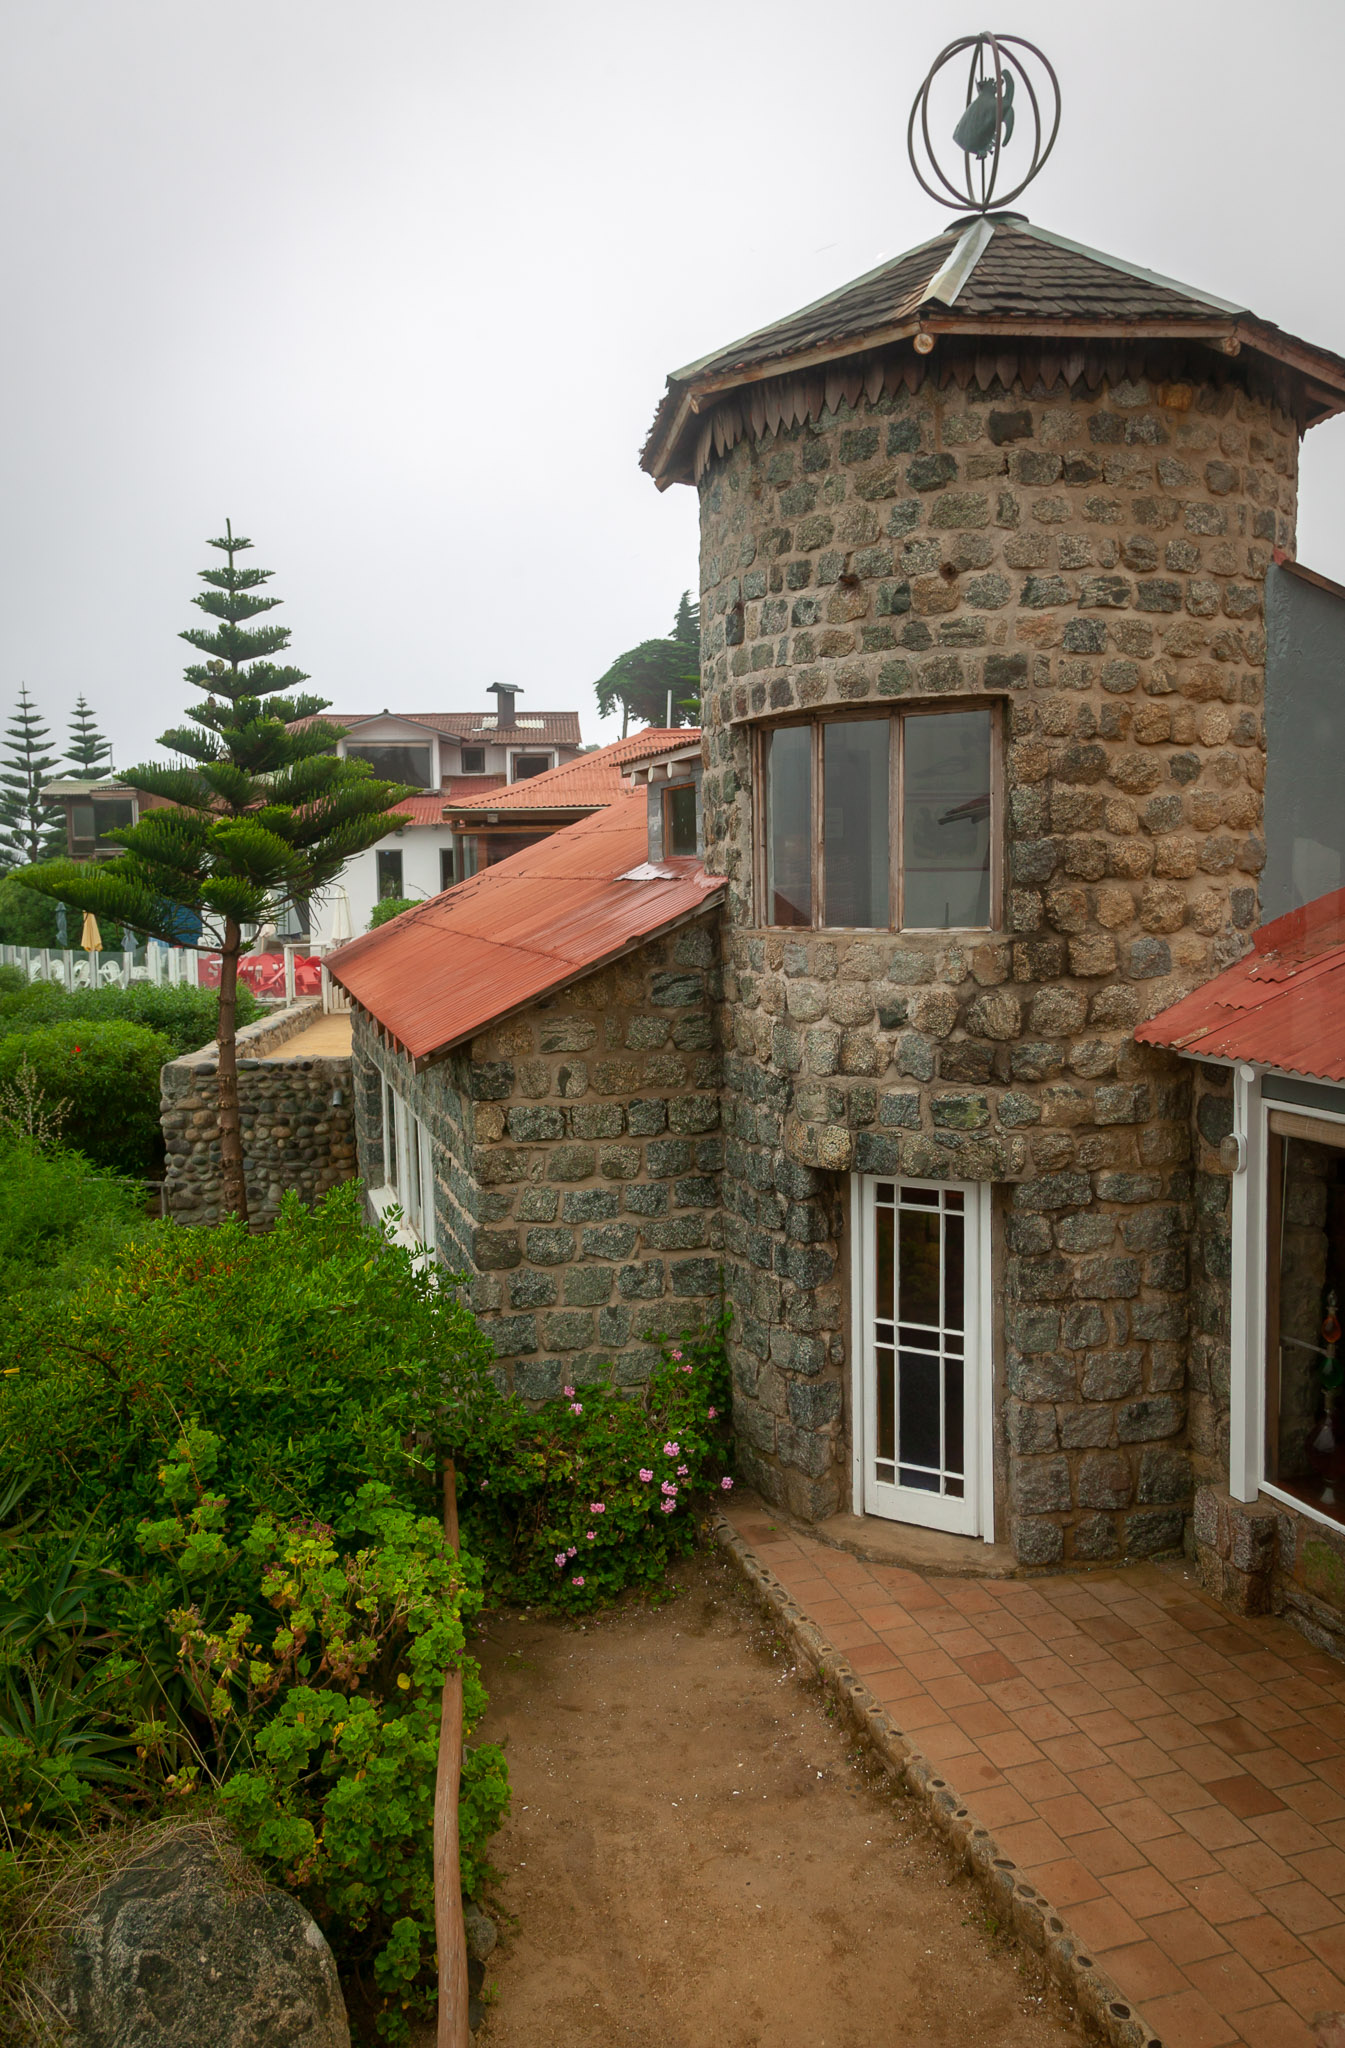 Pablo Neruda's house at Isla Negra